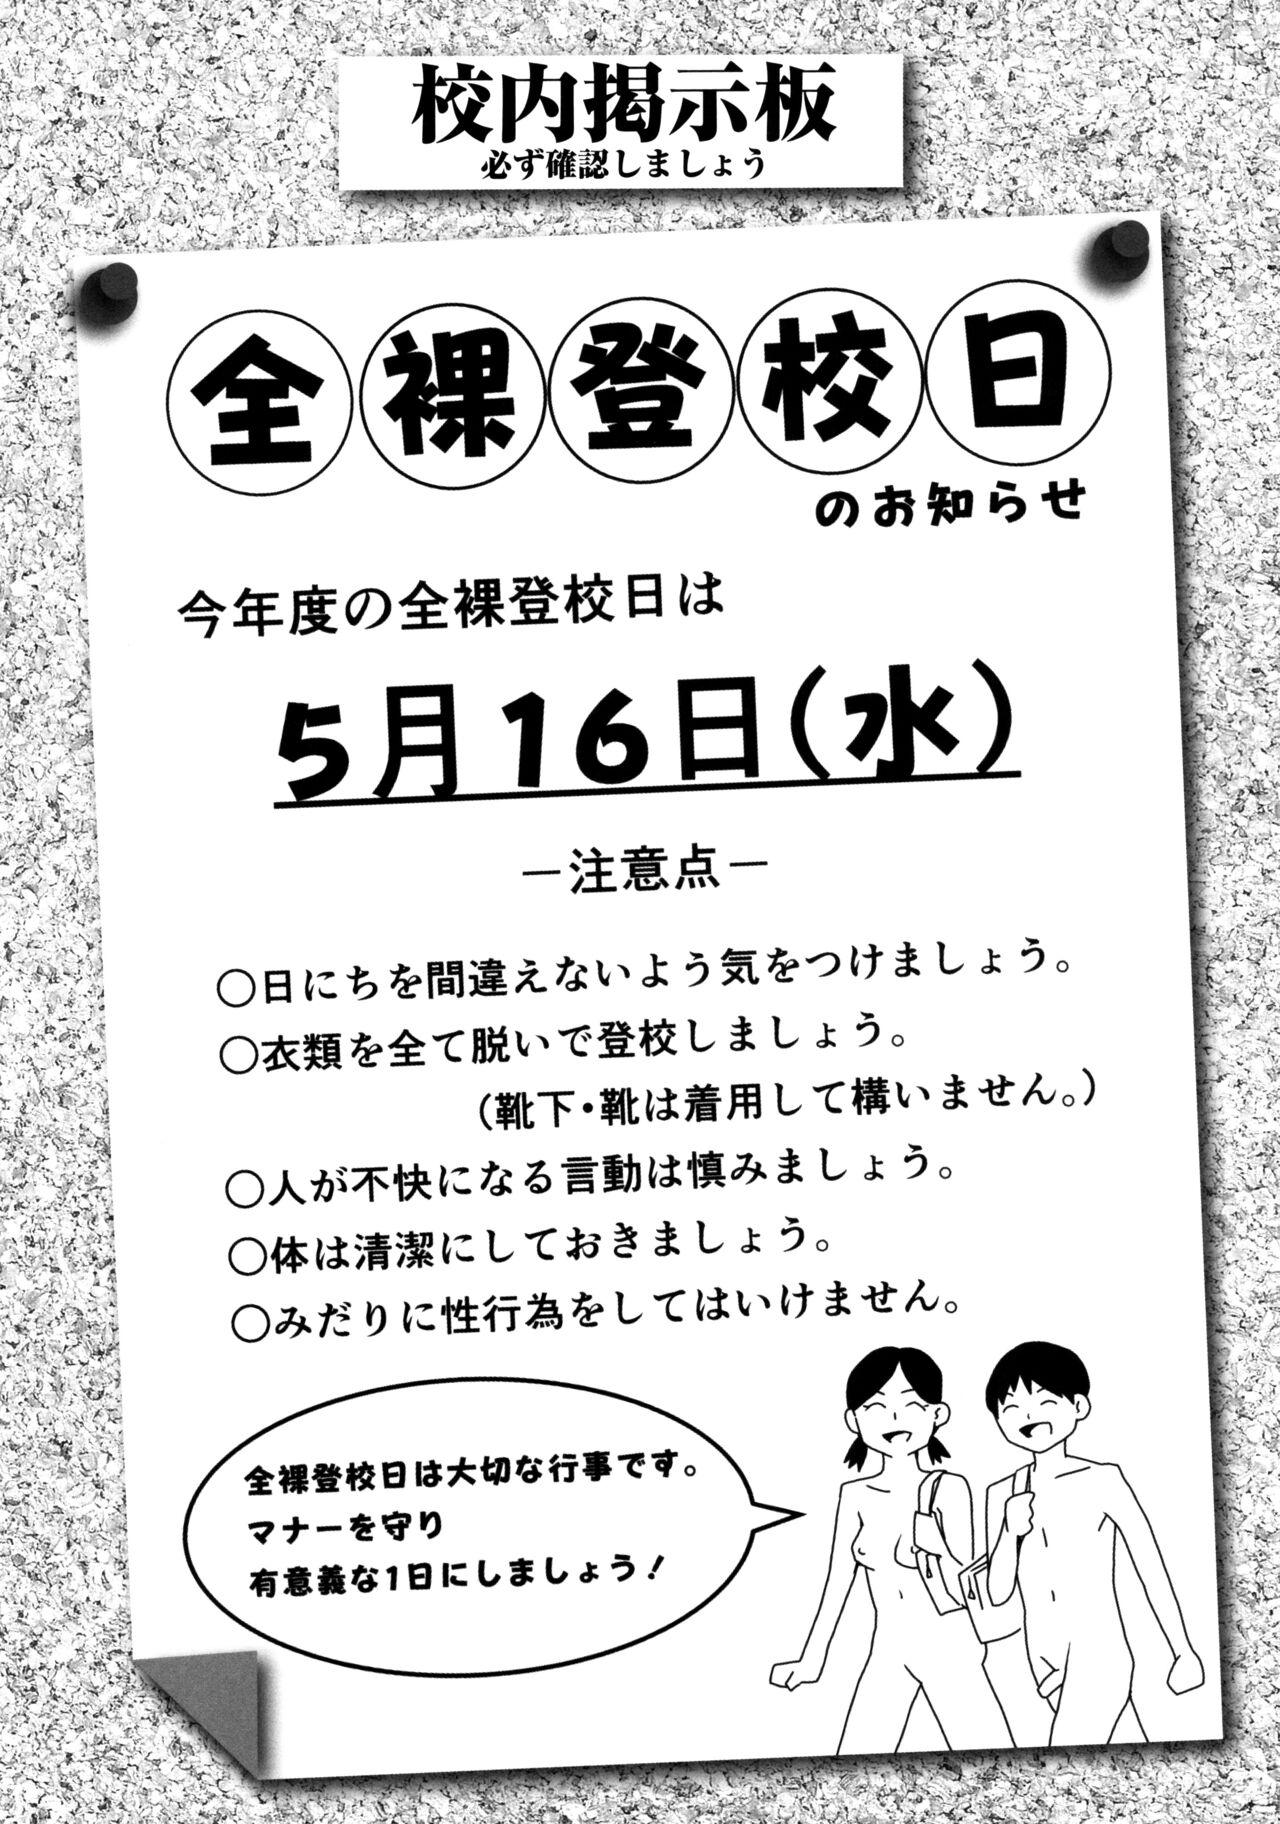 Watashi ga Zenra ni Natta Wake Melonbooks Gentei 8P Leaflet 2